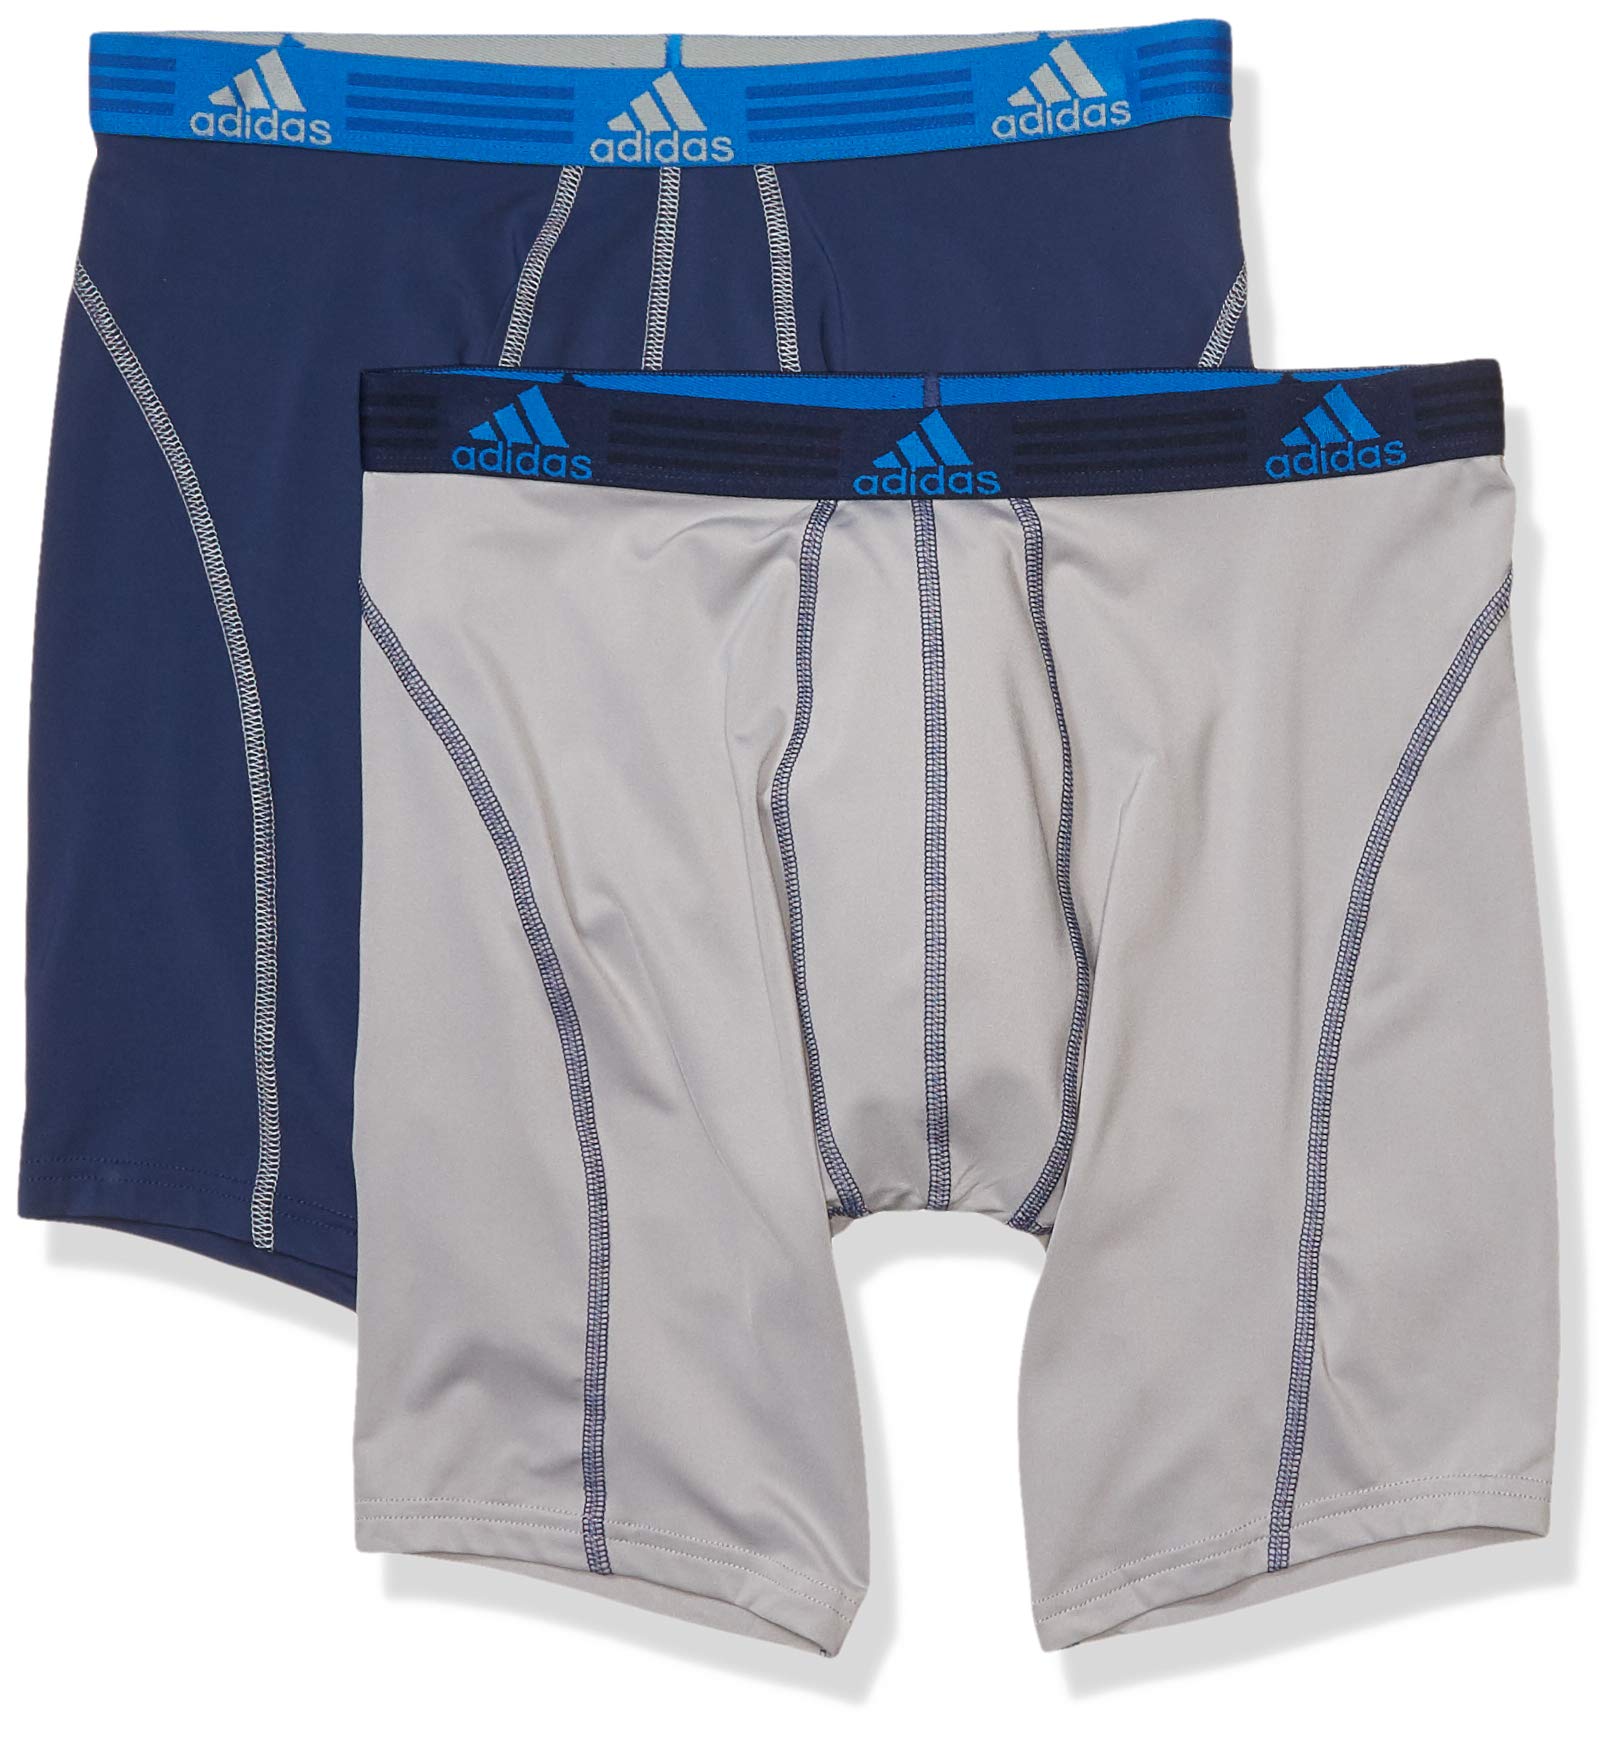 adidas Men's Sport Performance Midway Underwear (2-Pack) Small Night  Indigo/Light Onix Light Onix/Night